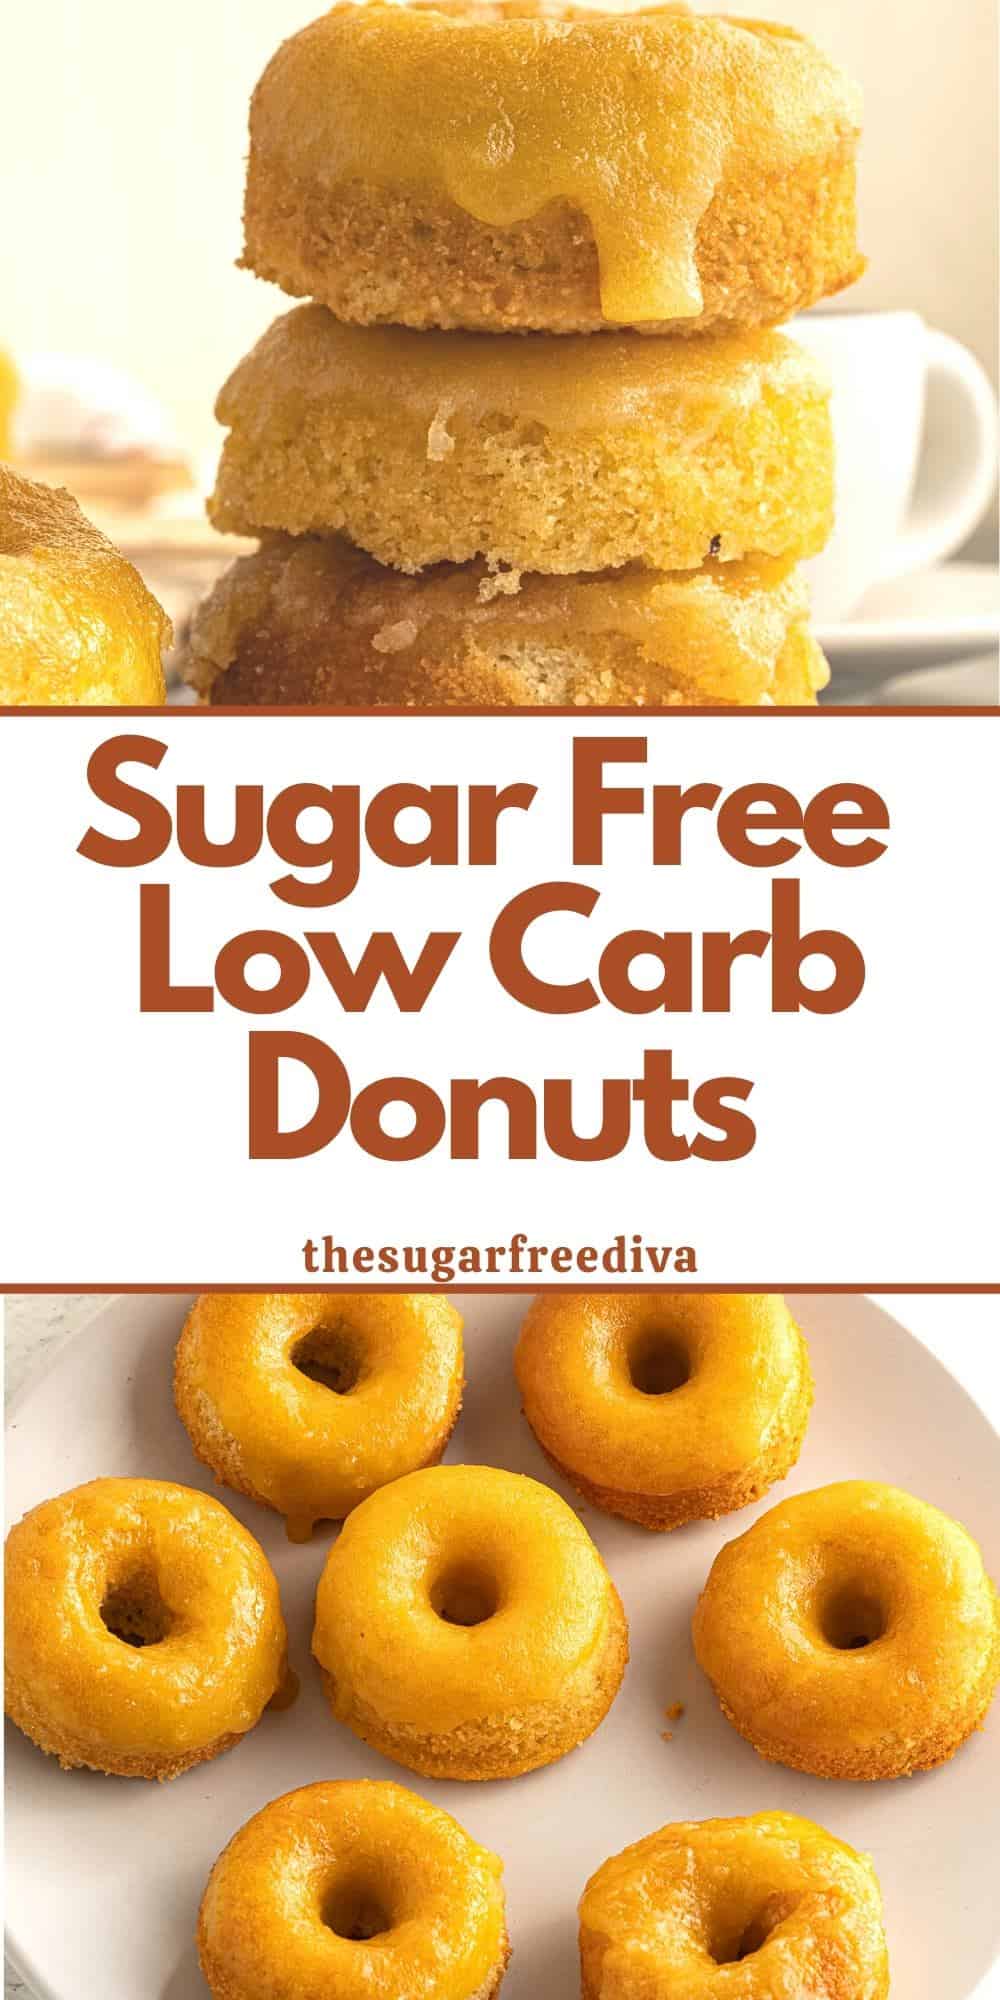 Sugar Free Low Carb Donuts